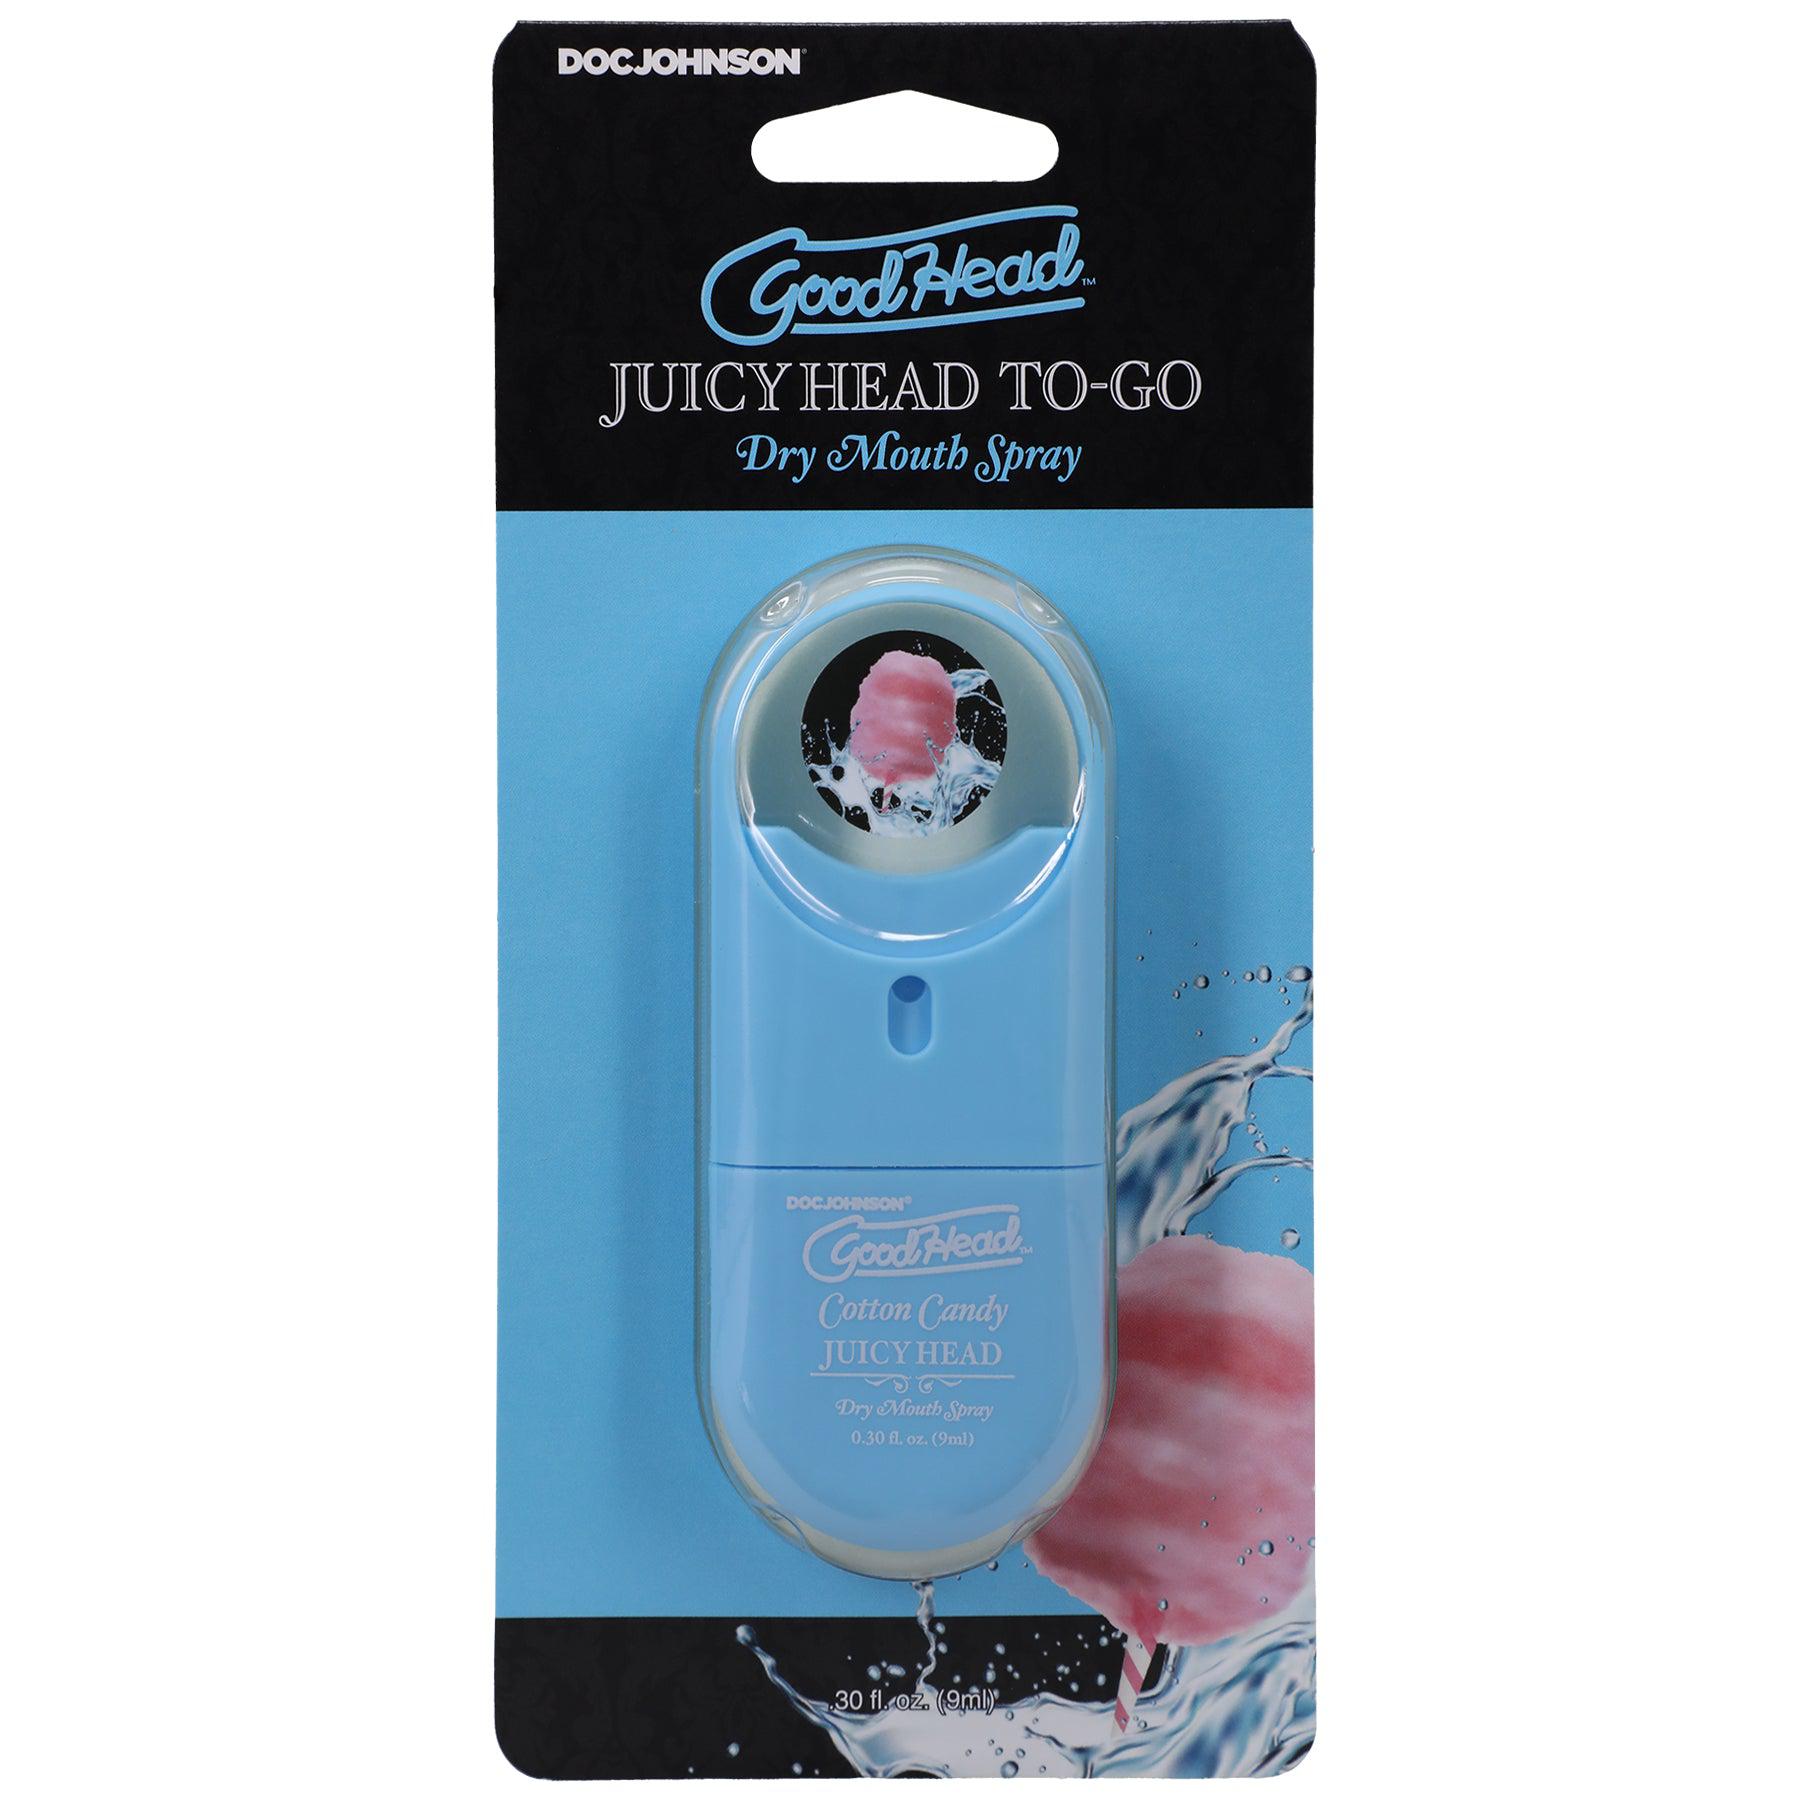 Goodhead - Juicy Head Dry Mouth Spray to-Go .30 Fl - Cotton Candy